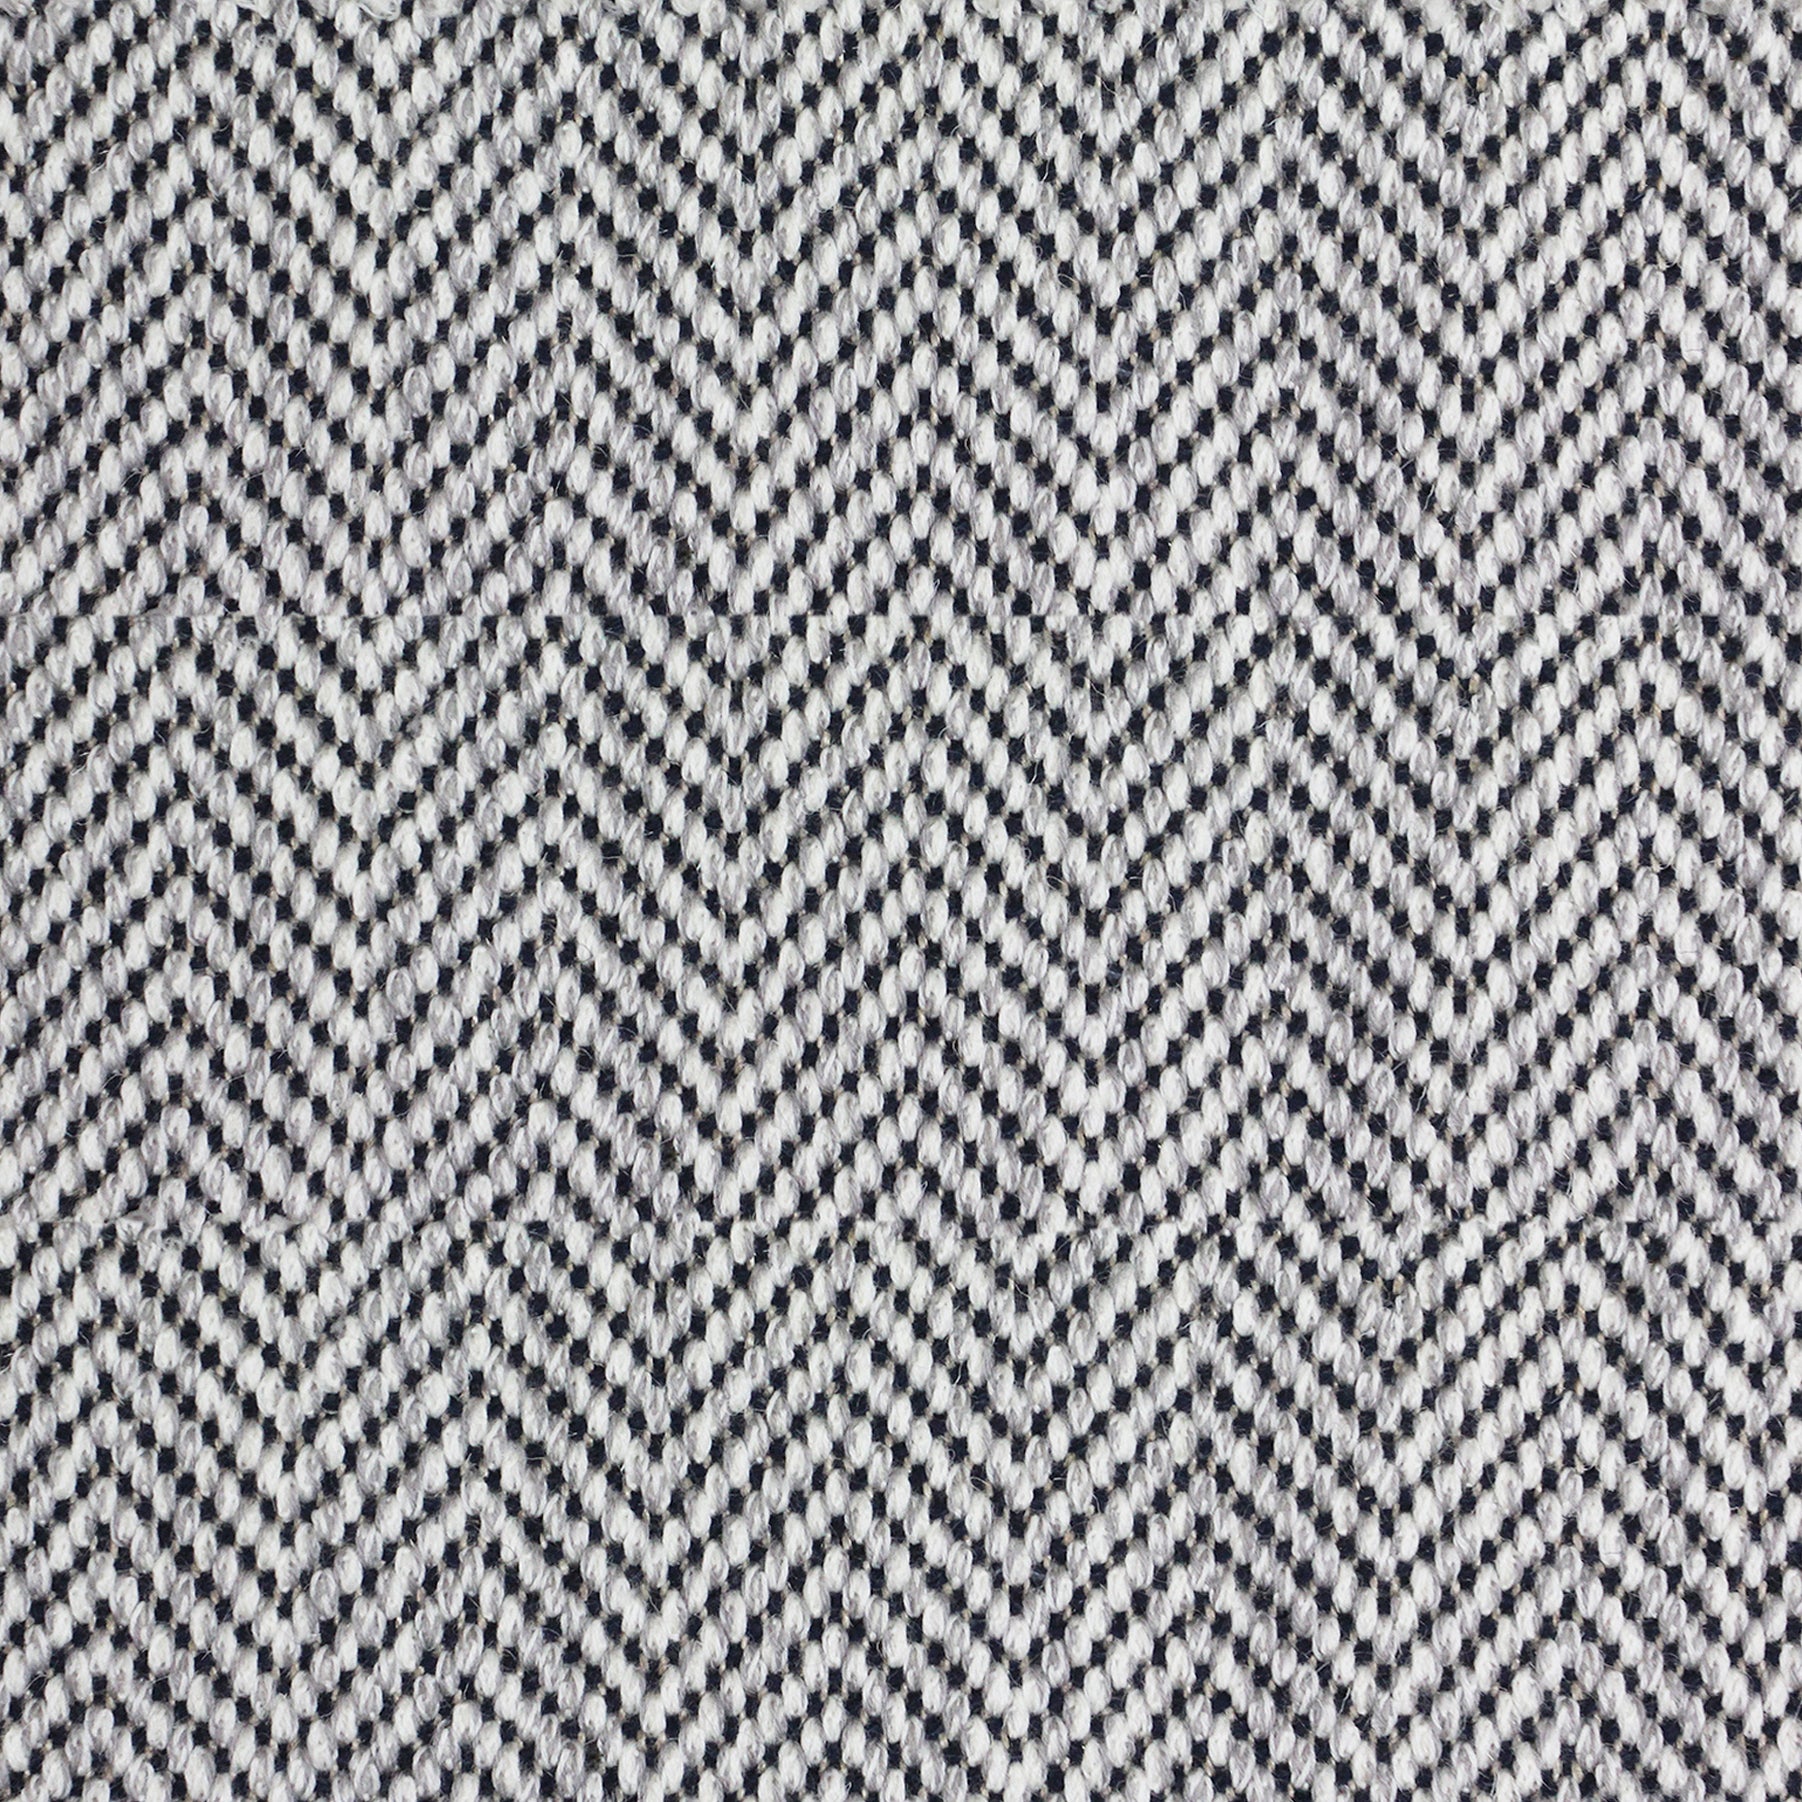 Wool broadloom carpet swatch in a herringbone weave in white and charcoal.